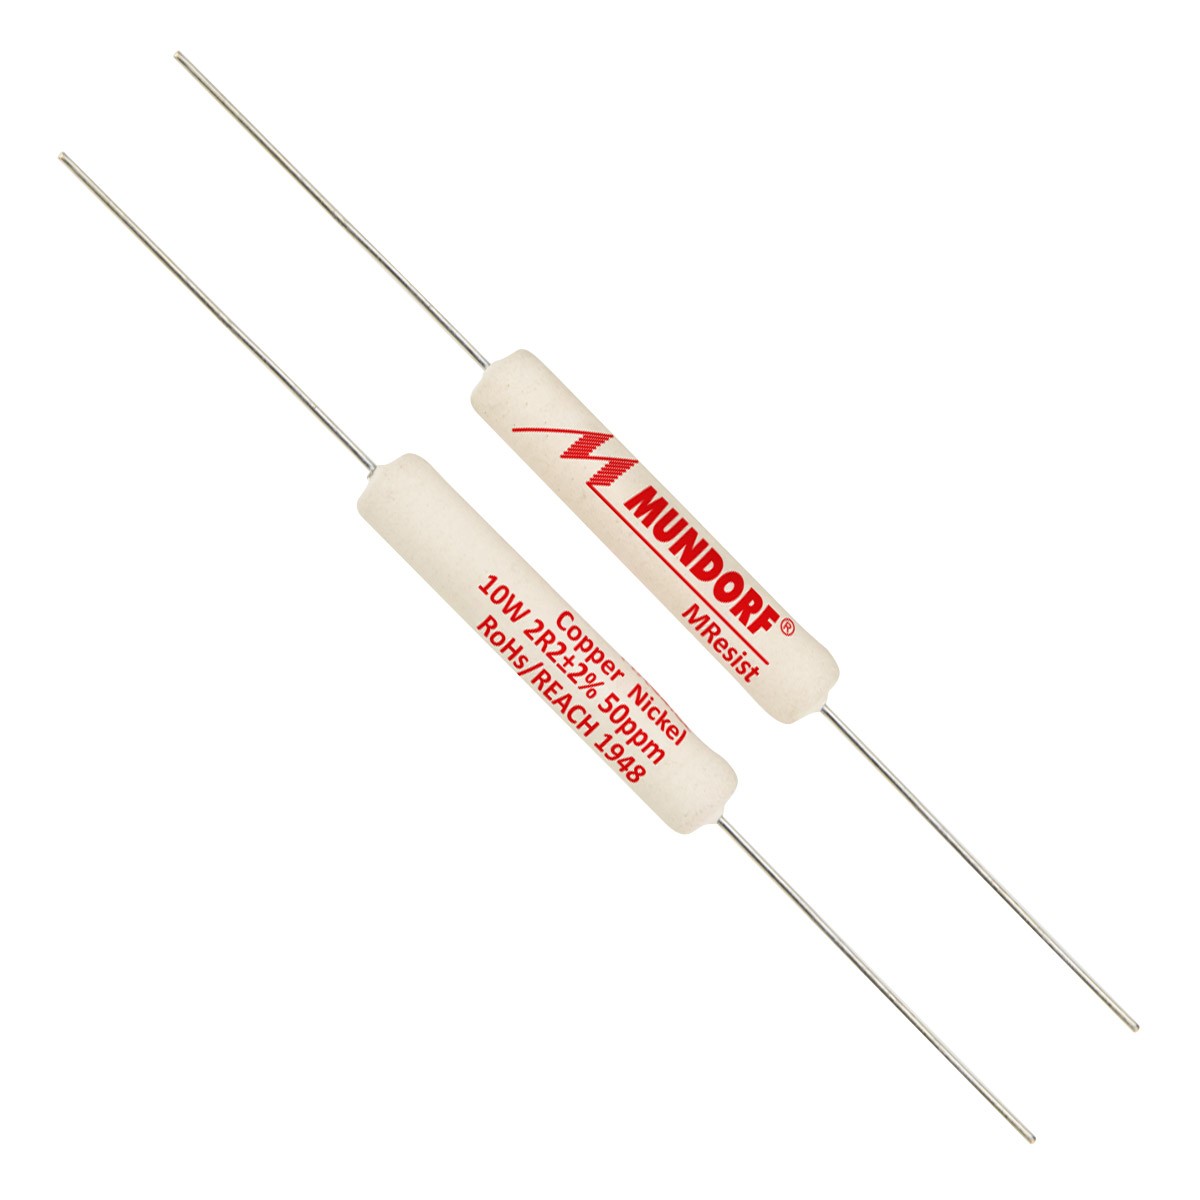 MUNDORF MRESIST CLASSIC Resistor 10W 0.47 Ohm